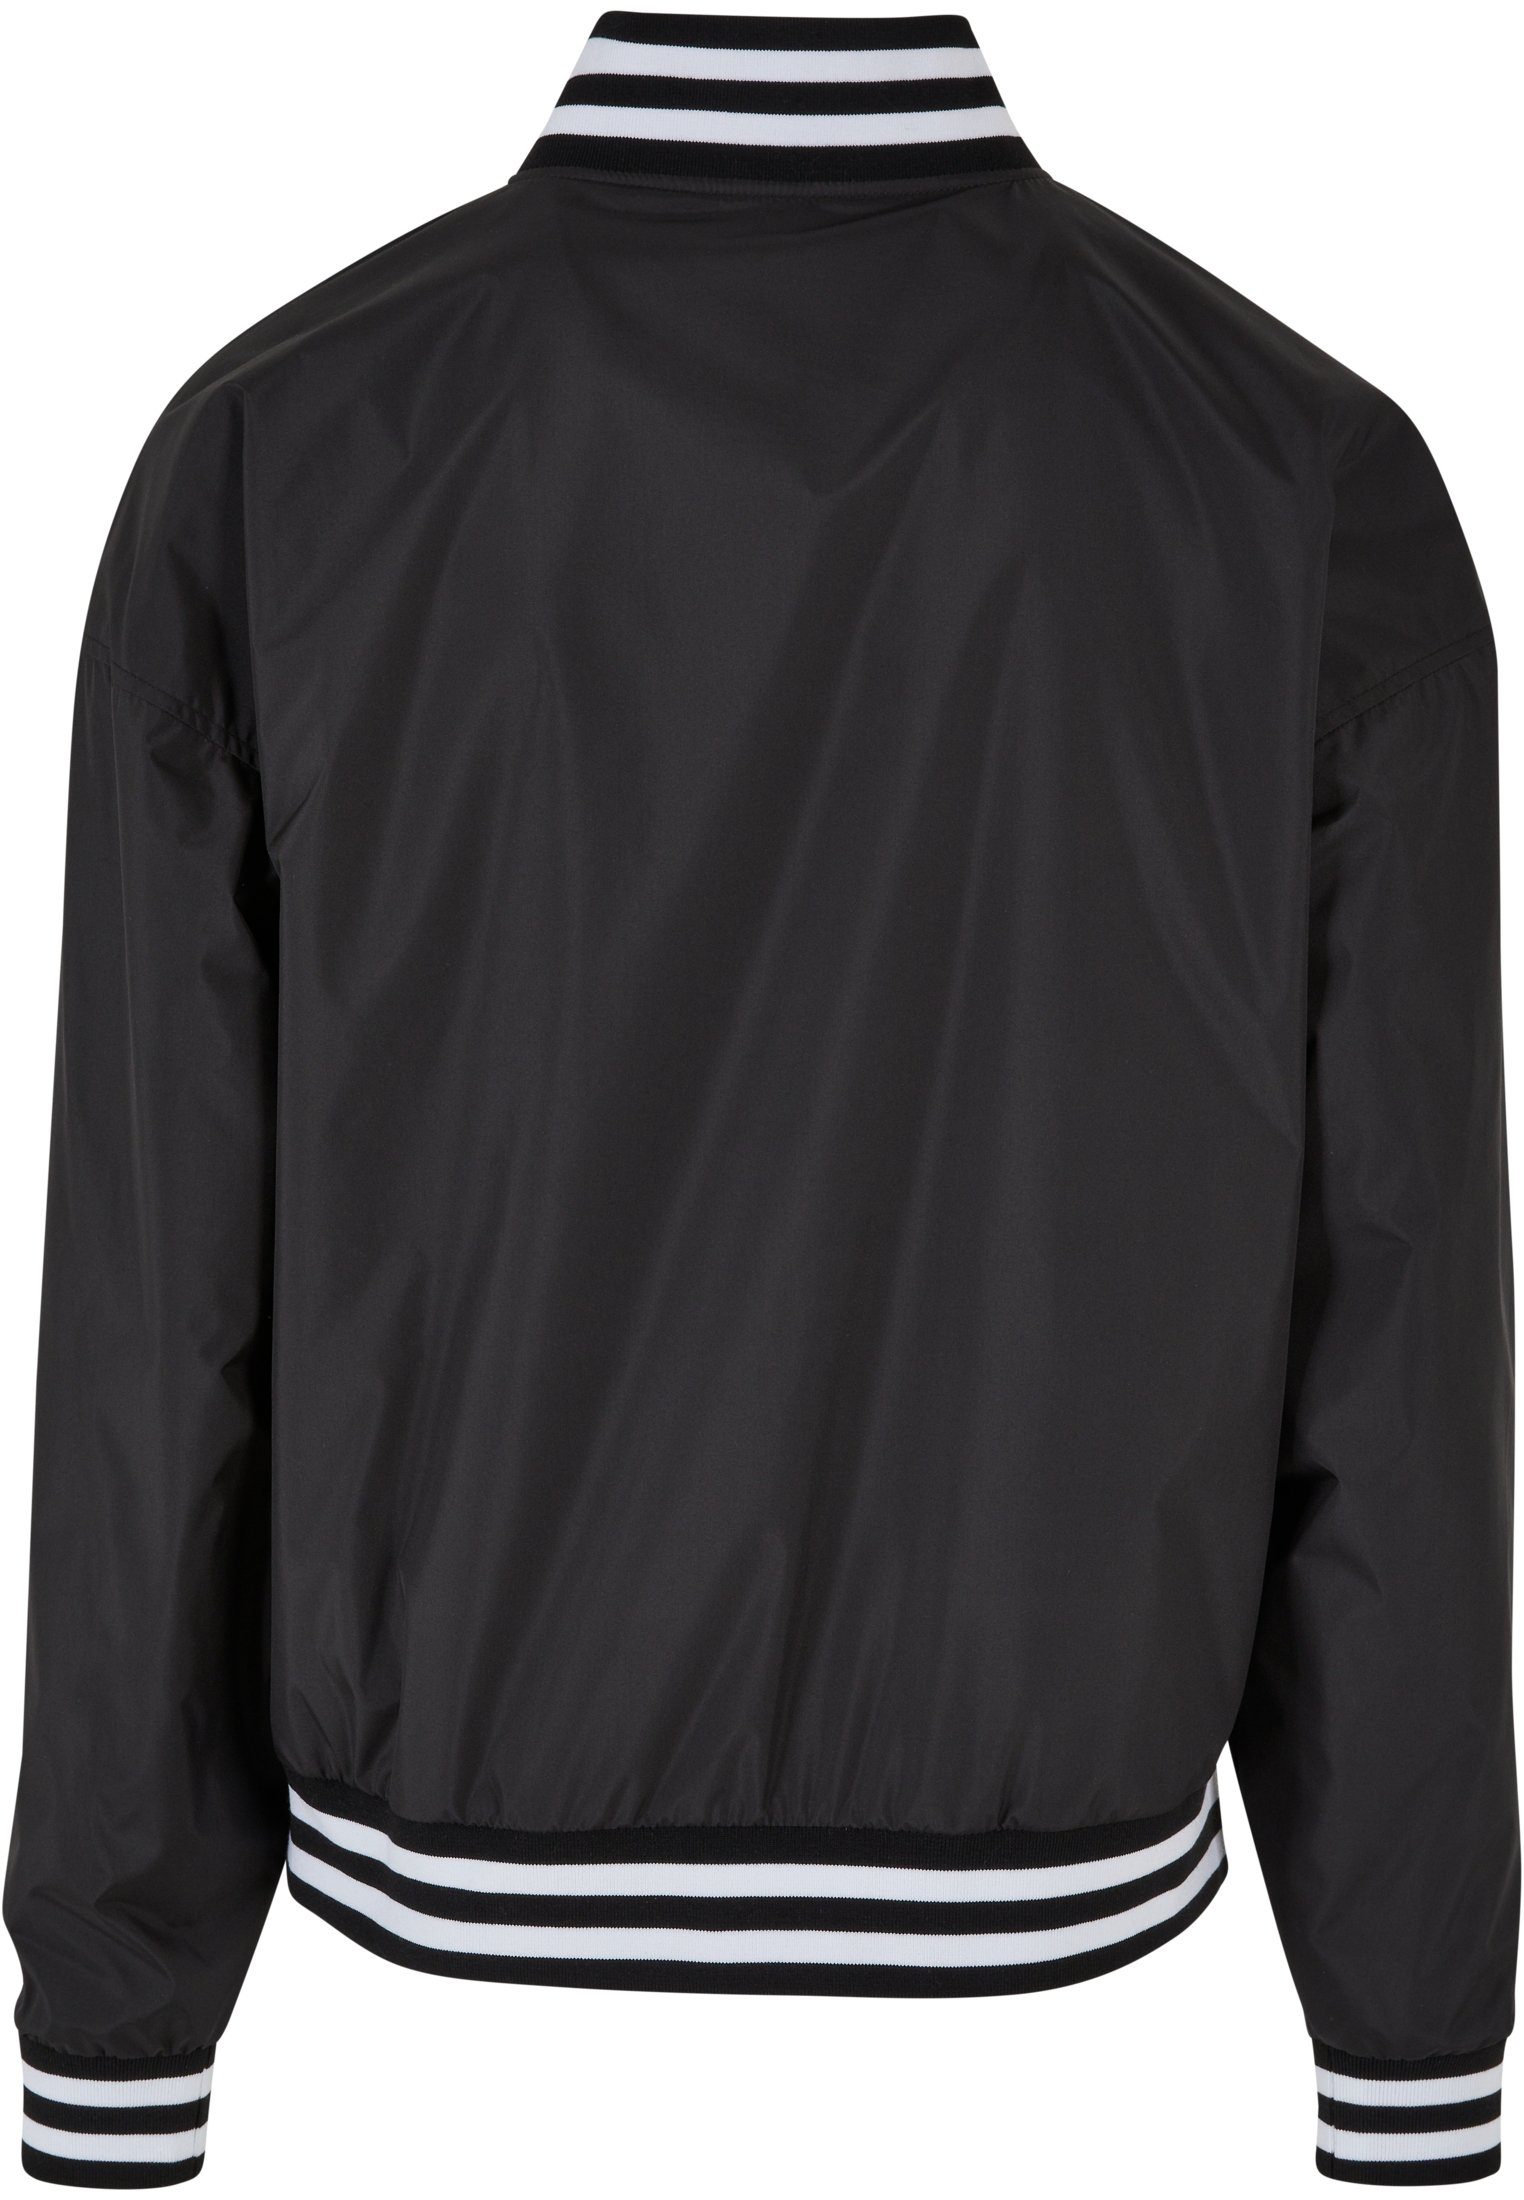 URBAN CLASSICS Outdoorjacke Herren Light College black Jacket (1-St)